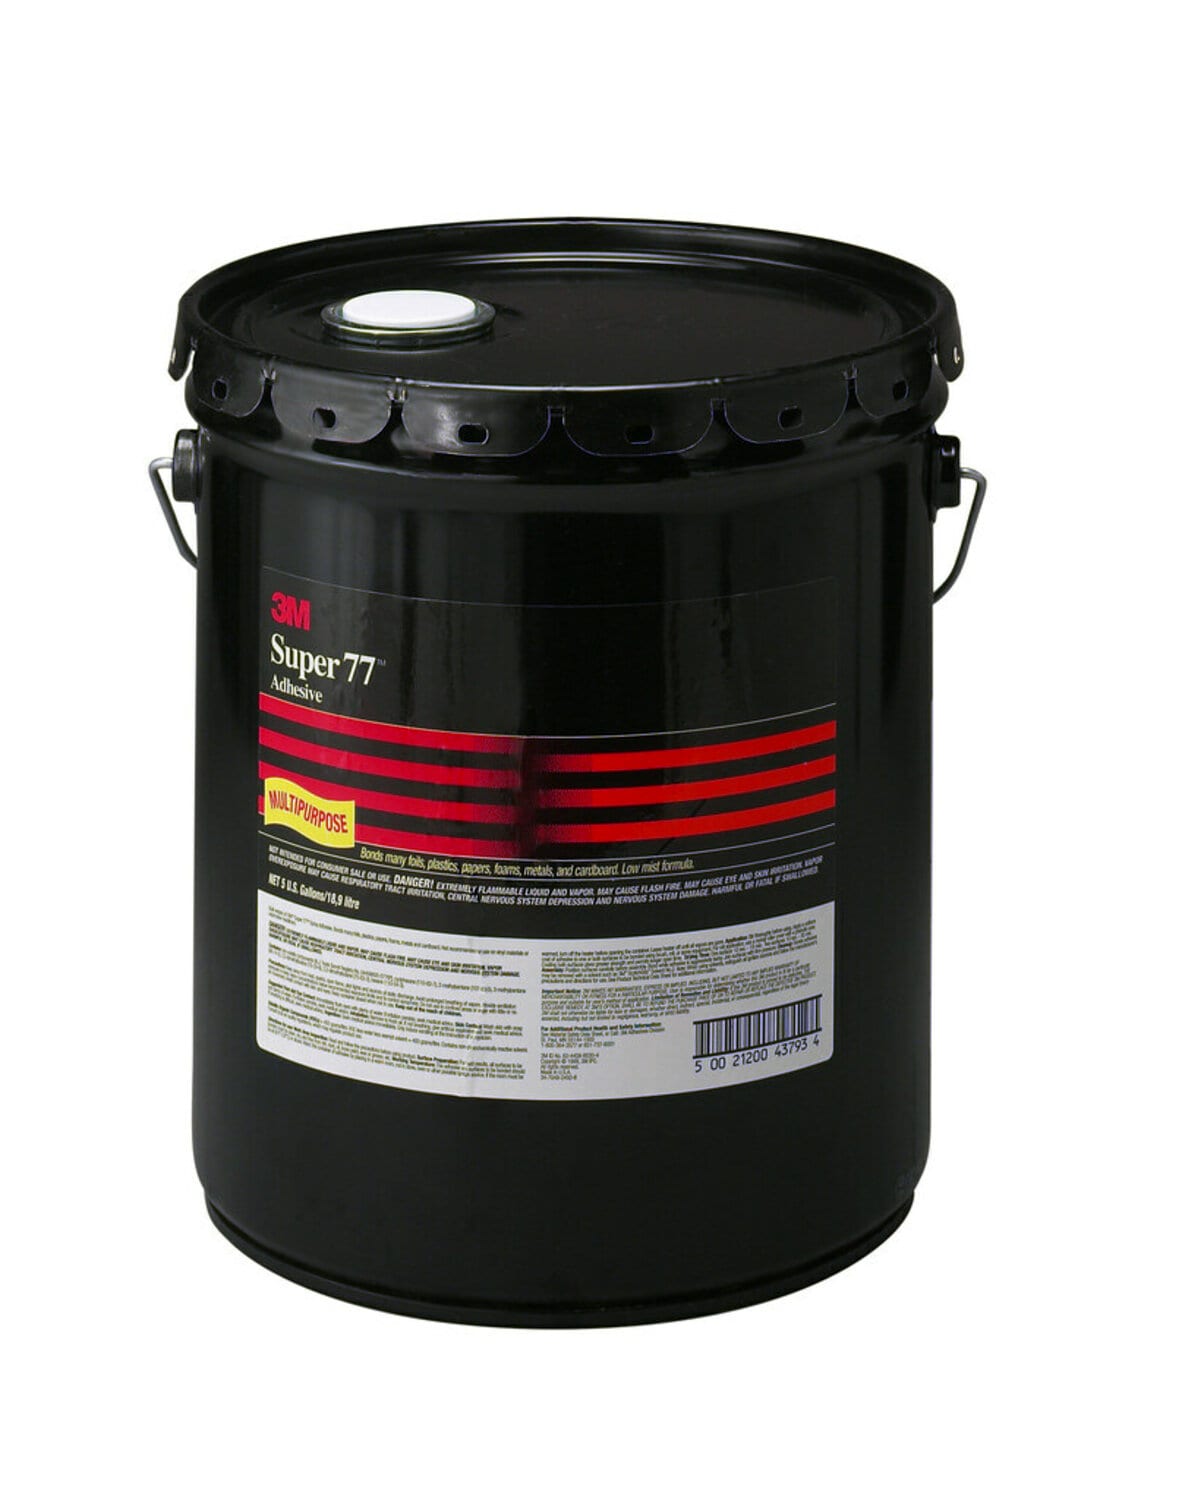 7010329893 - 3M Super 77 Multipurpose Spray Adhesive, Clear, 55 Gallon Drum (50
Gallon Net)